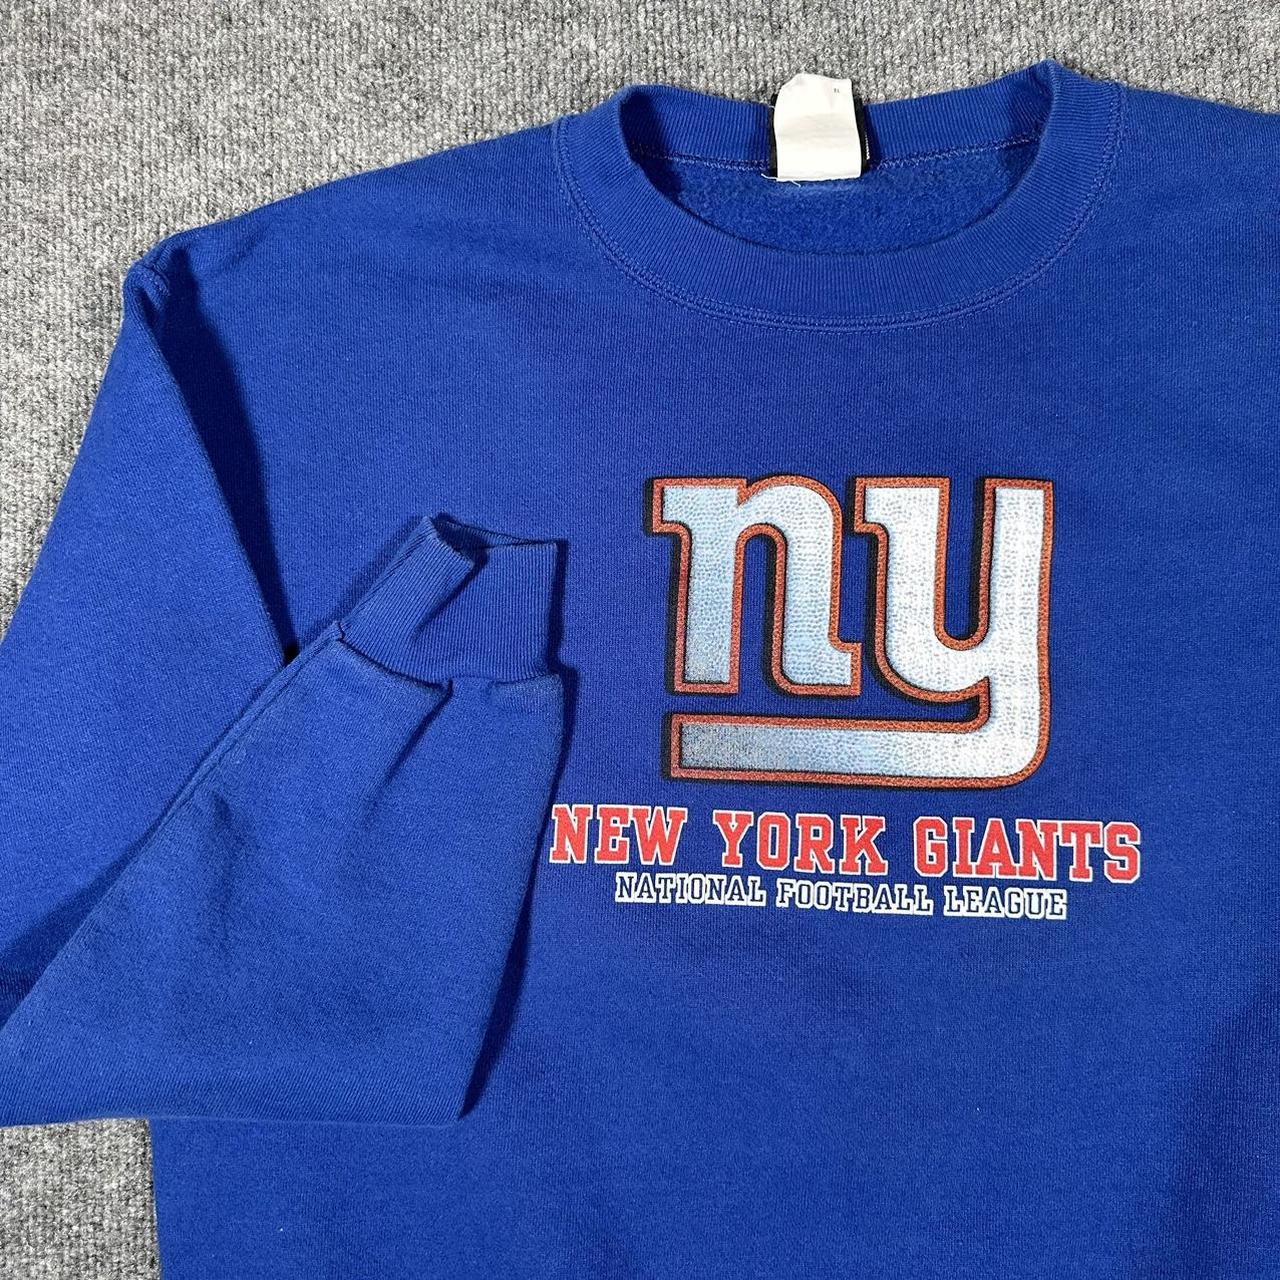 Vintage New York Football Shirt, Giants Football Sweatshirt, NY